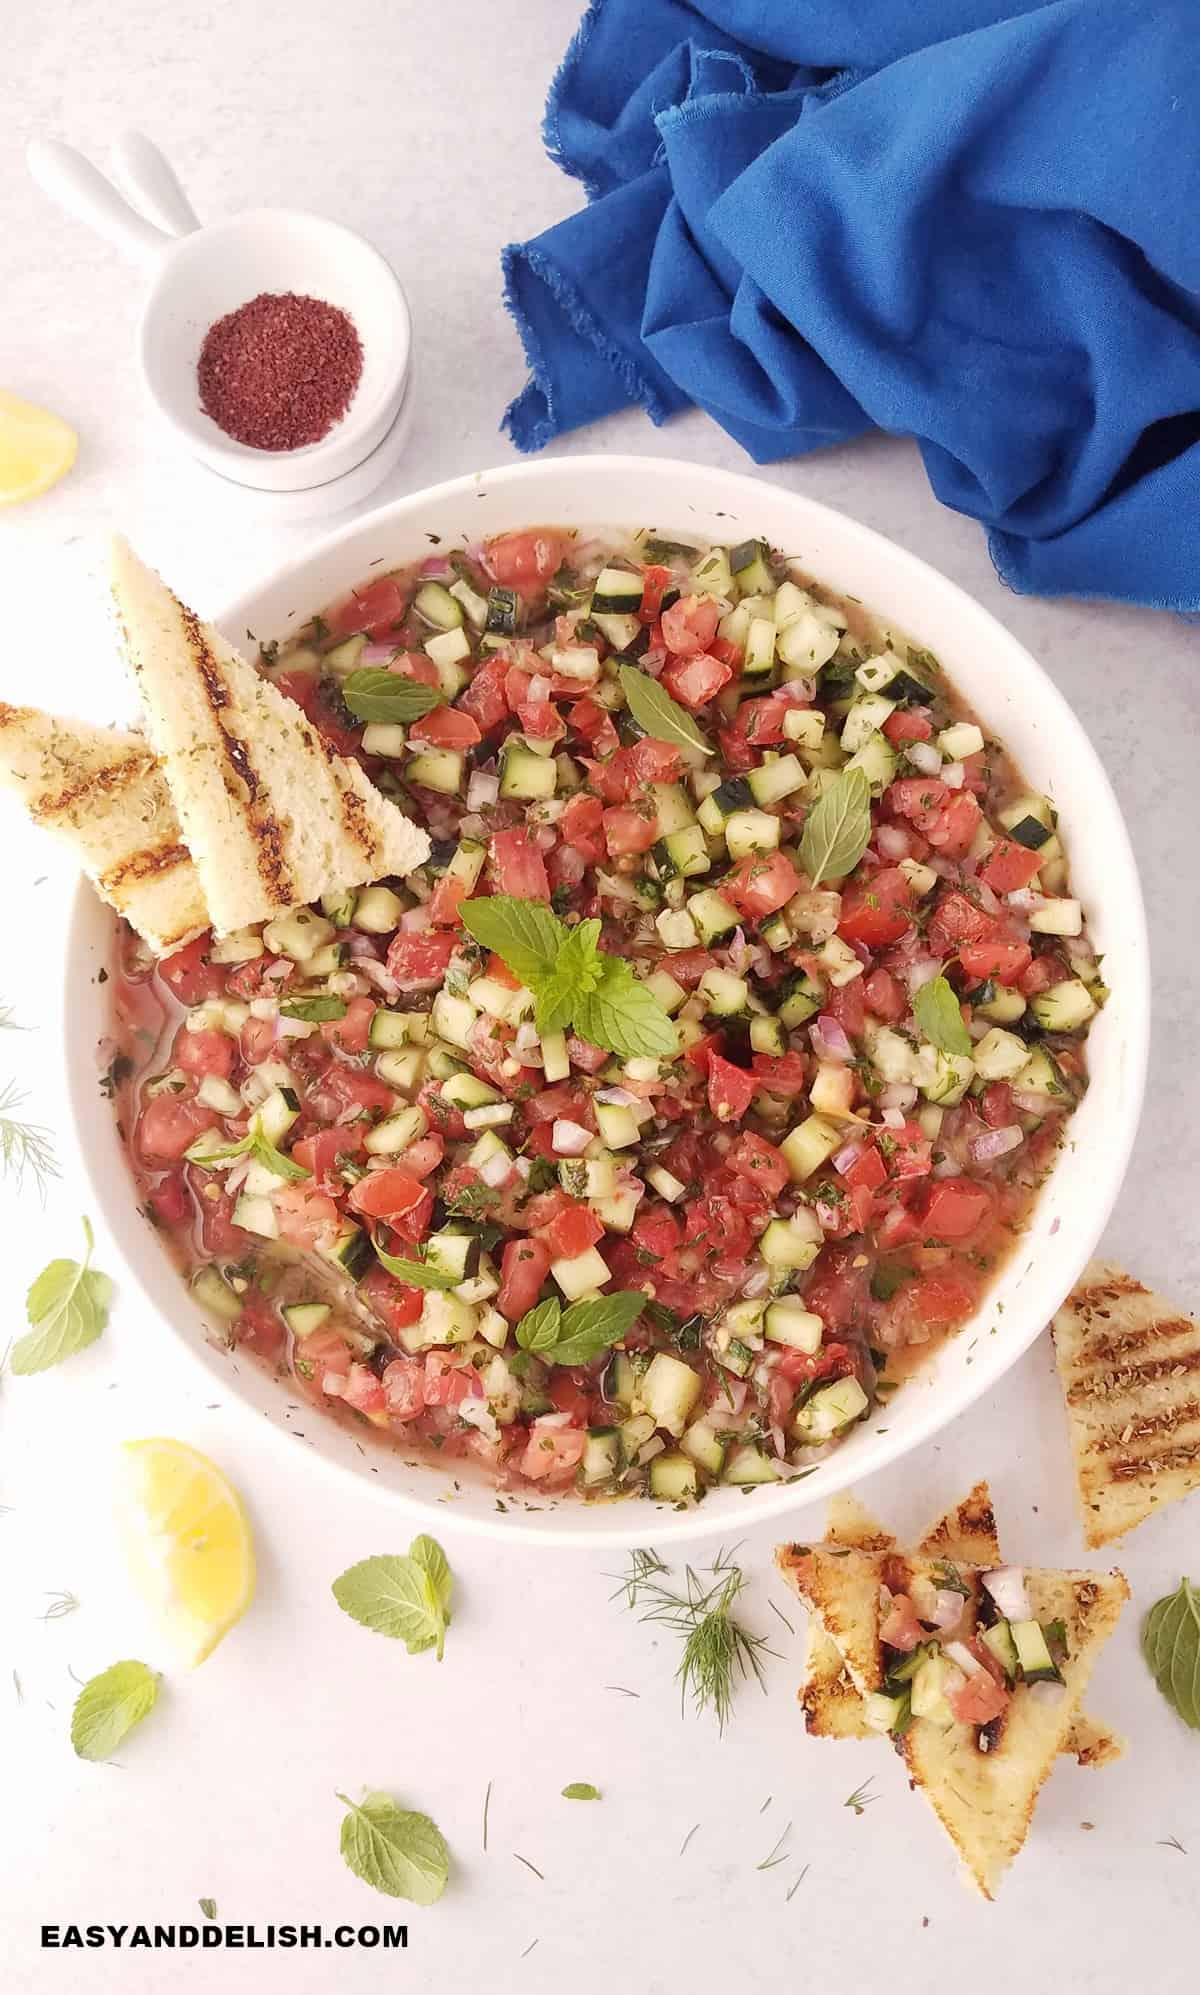 Iranian chopped salad with mini toasts plus lemon wedges and sumac on the side.